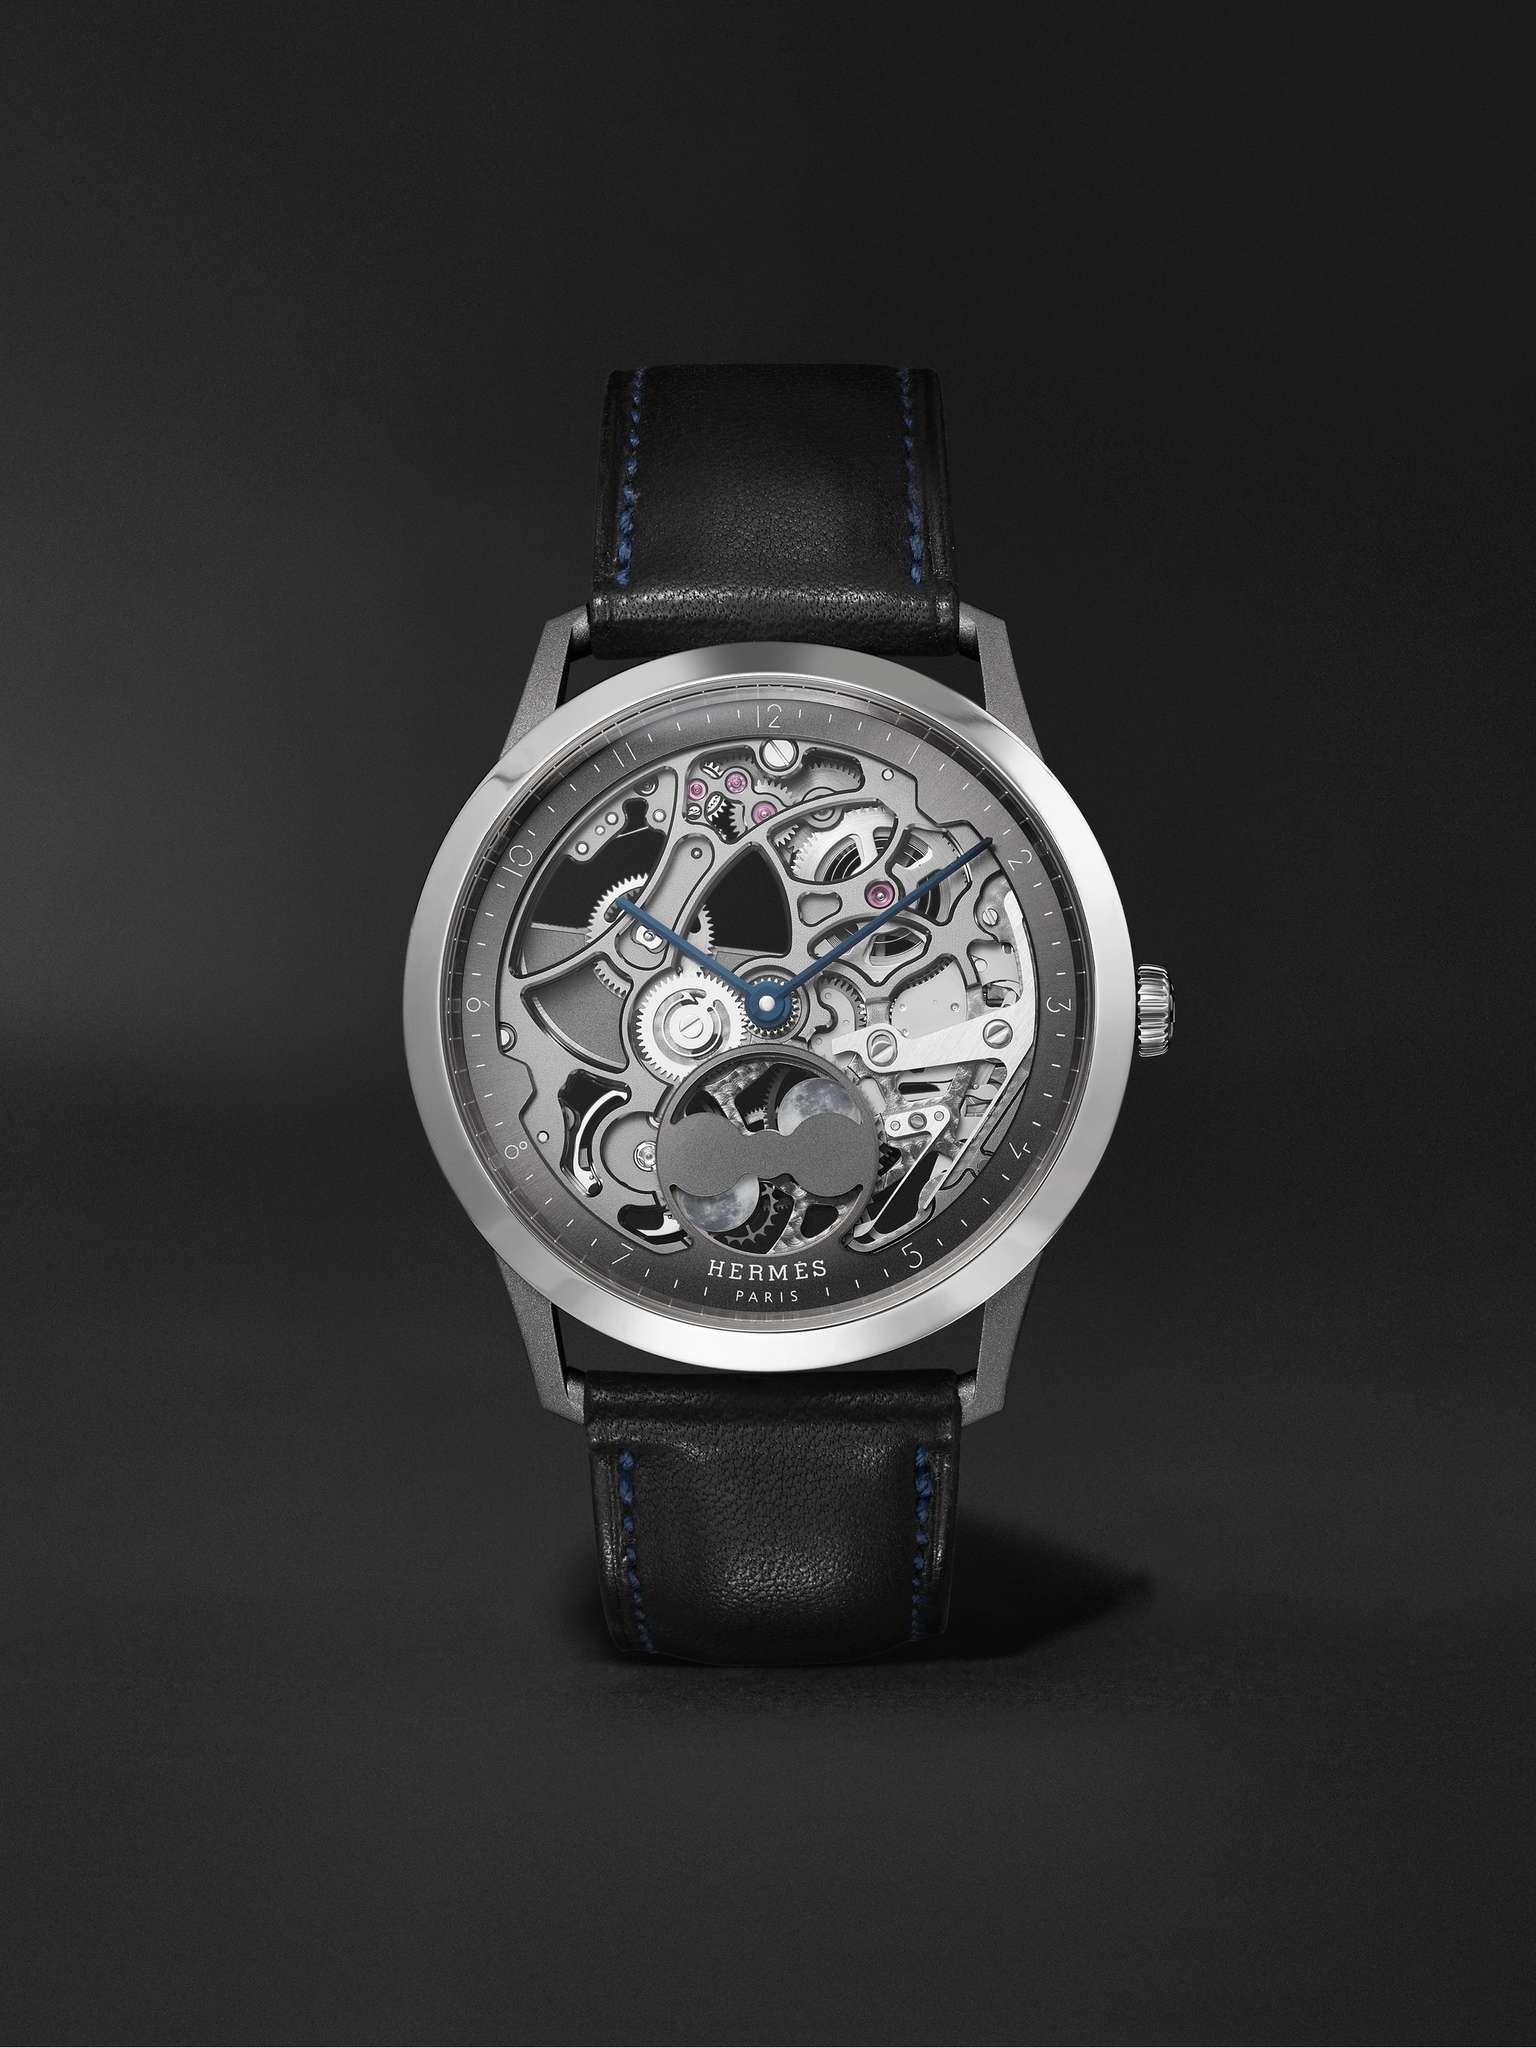 Slim d'Hermès Squelette Lune 39.5mm Automatic Titanium and Leather Watch, Ref. No. 054695WW00 - 1